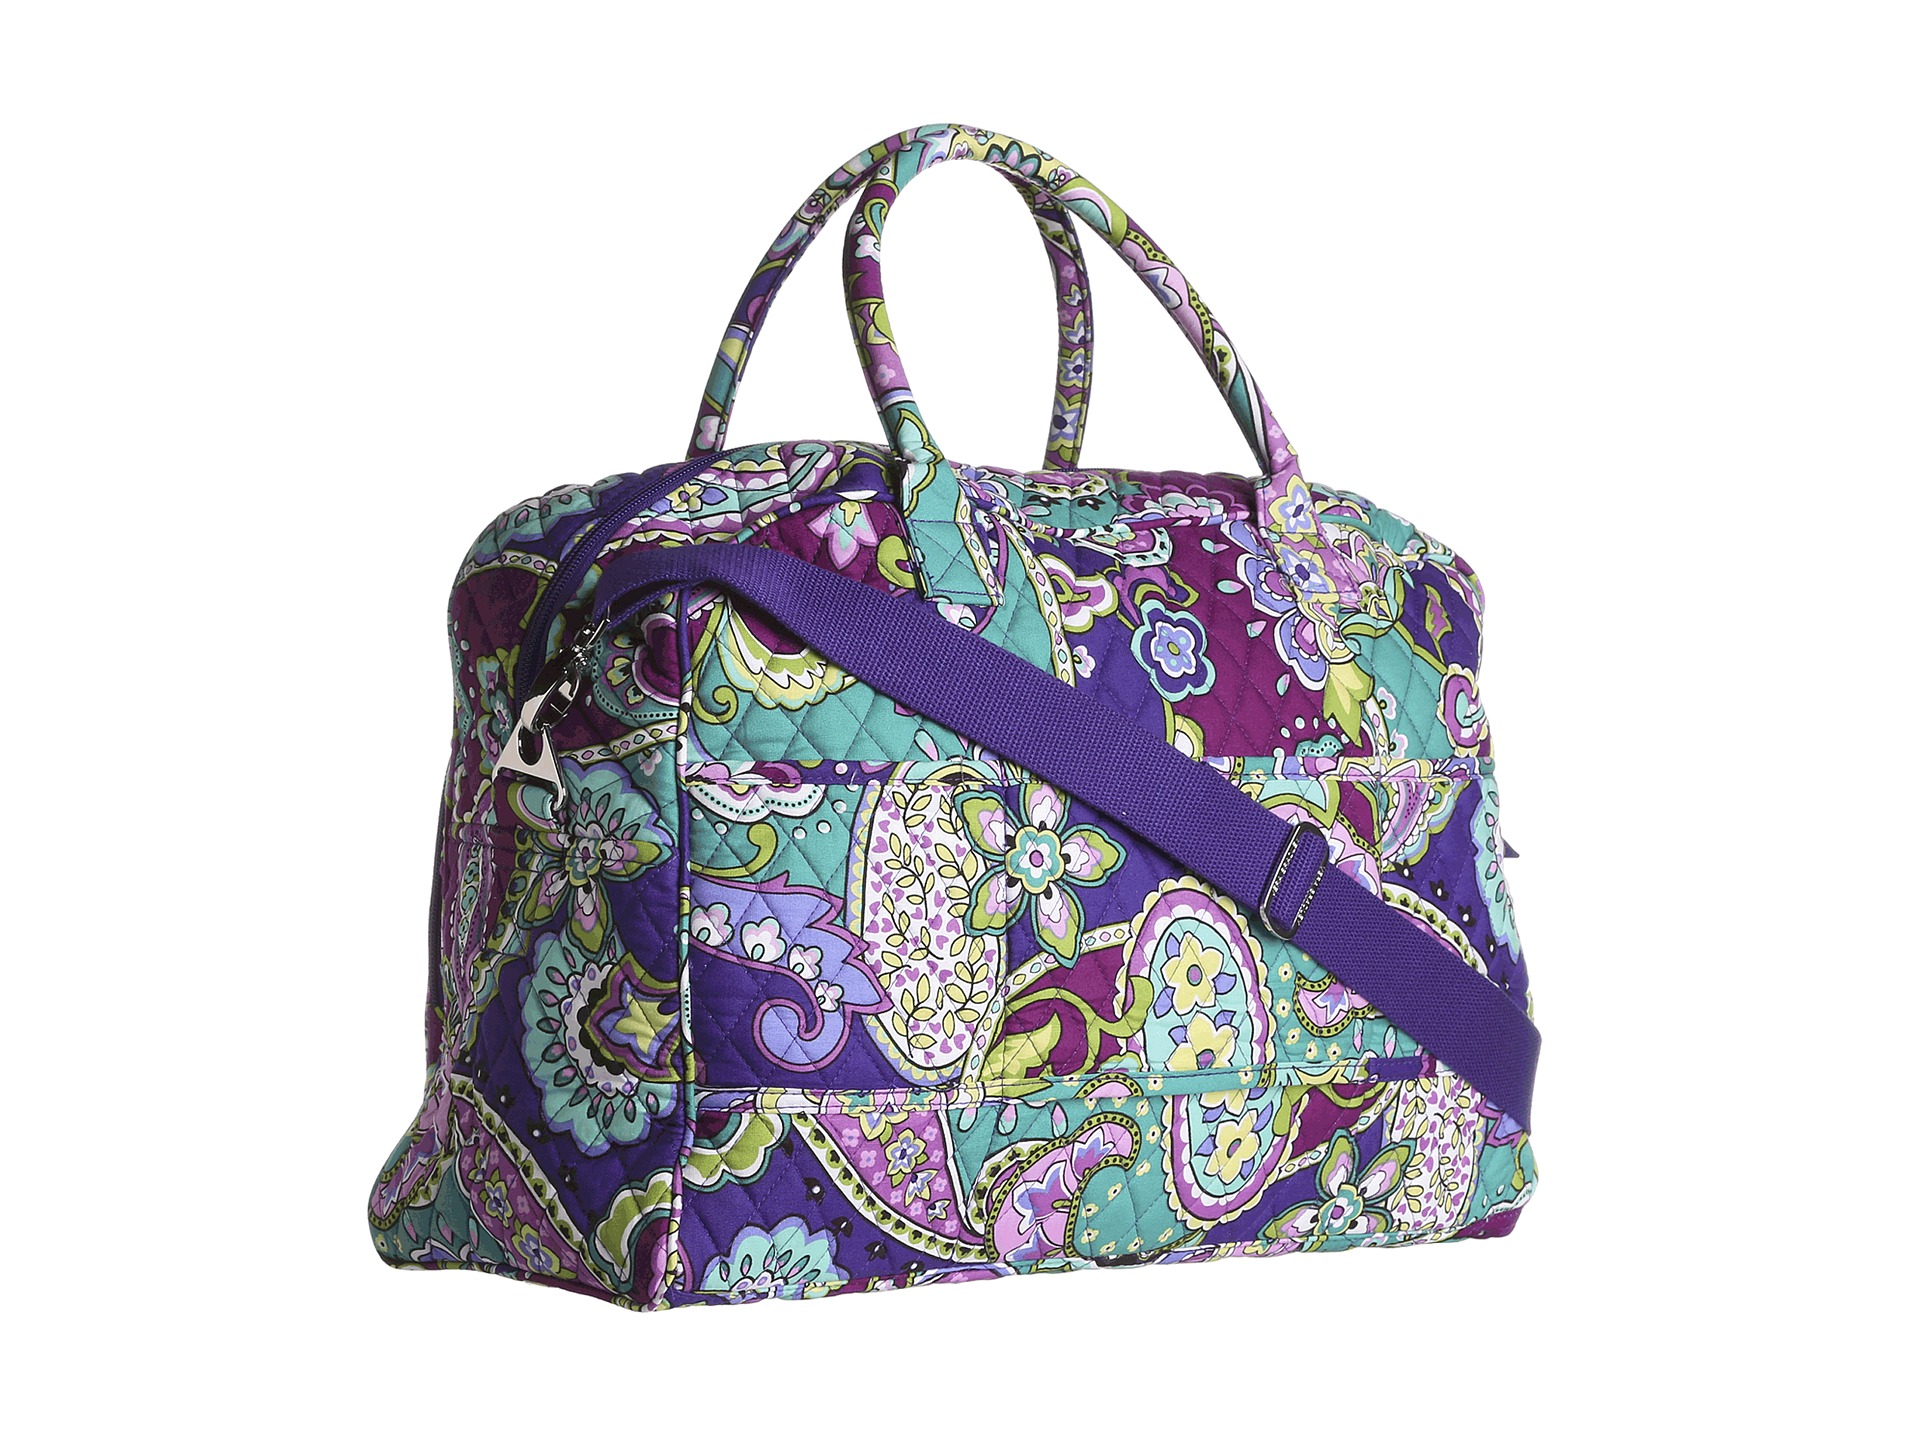 Vera Bradley Luggage Weekender - Zappos.com Free Shipping BOTH Ways